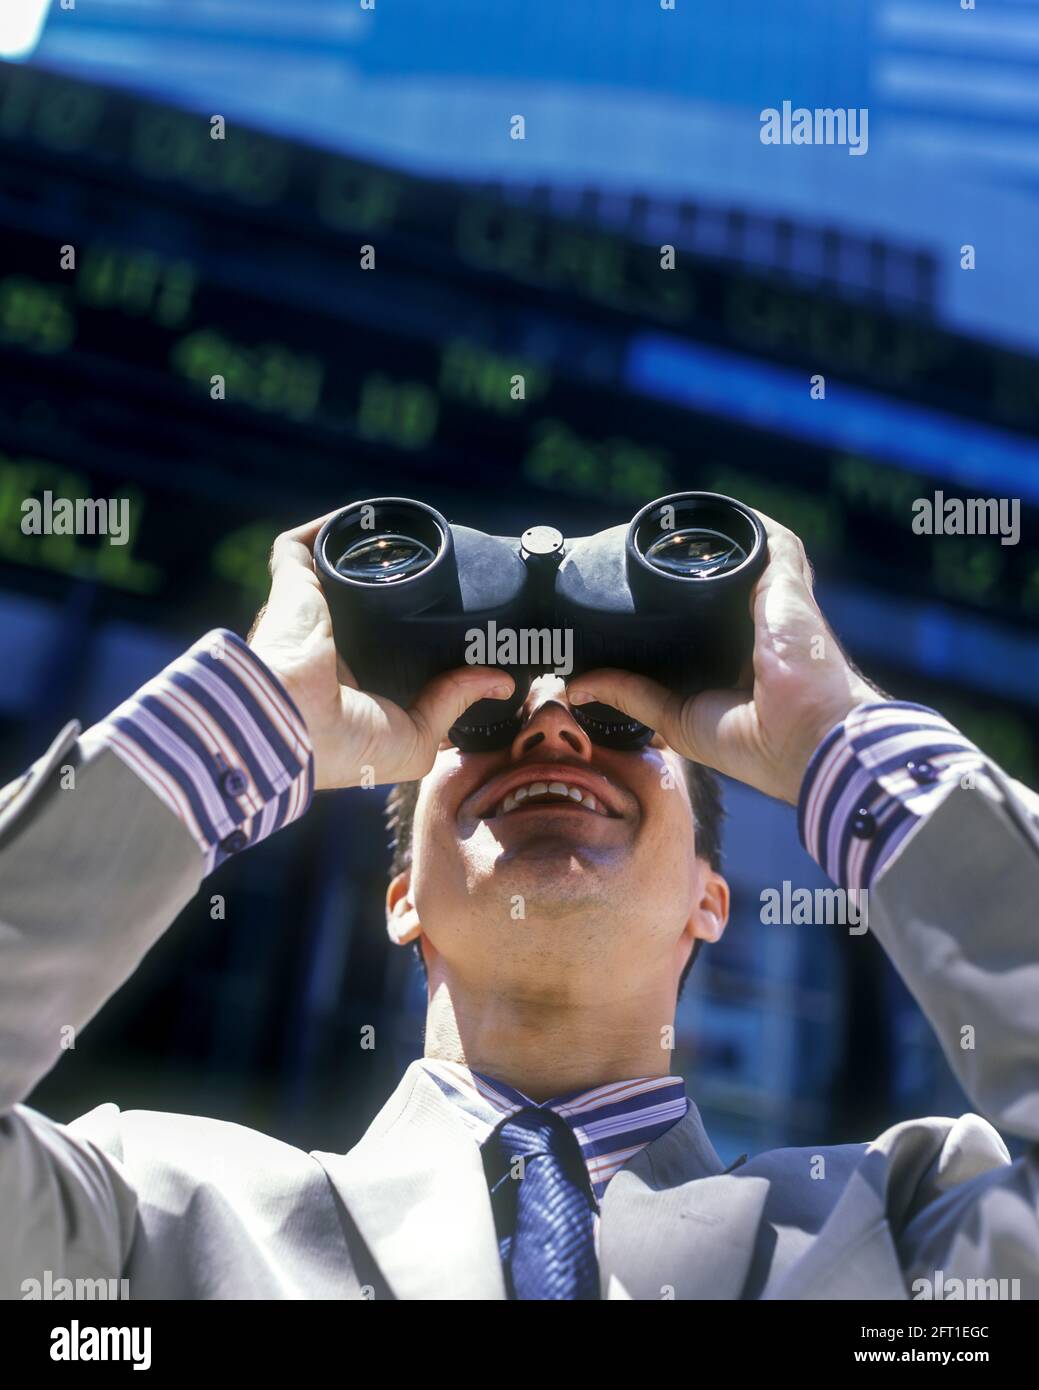 2005 HISTORICAL SMILING OFFICE WORKER LOOKING UP THROUGH BINOCULARS (©STEINER-OPTIC GMBH 2000) BELOW ELECTRONIC STOCK MARKET PRICE TICKER DISPLAY Stock Photo